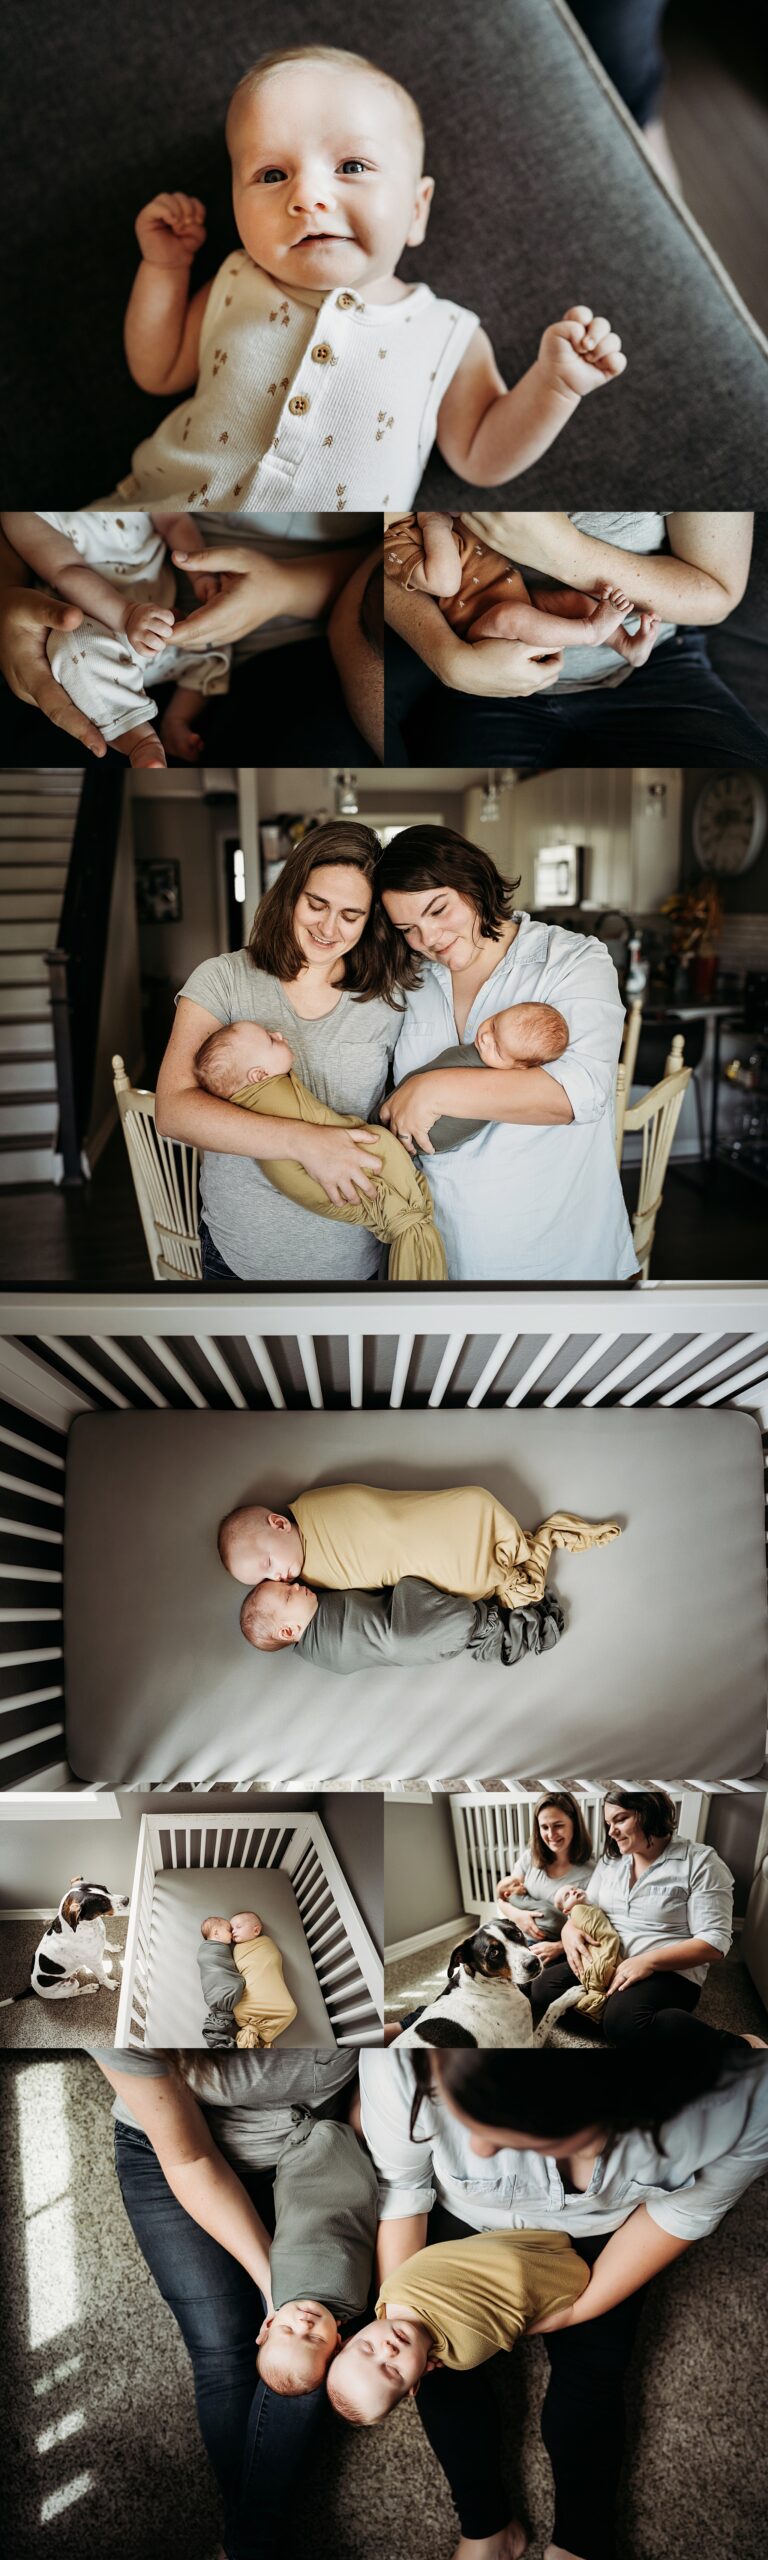 denver family and newborn photographer, lgbtq friendly, same sex parents